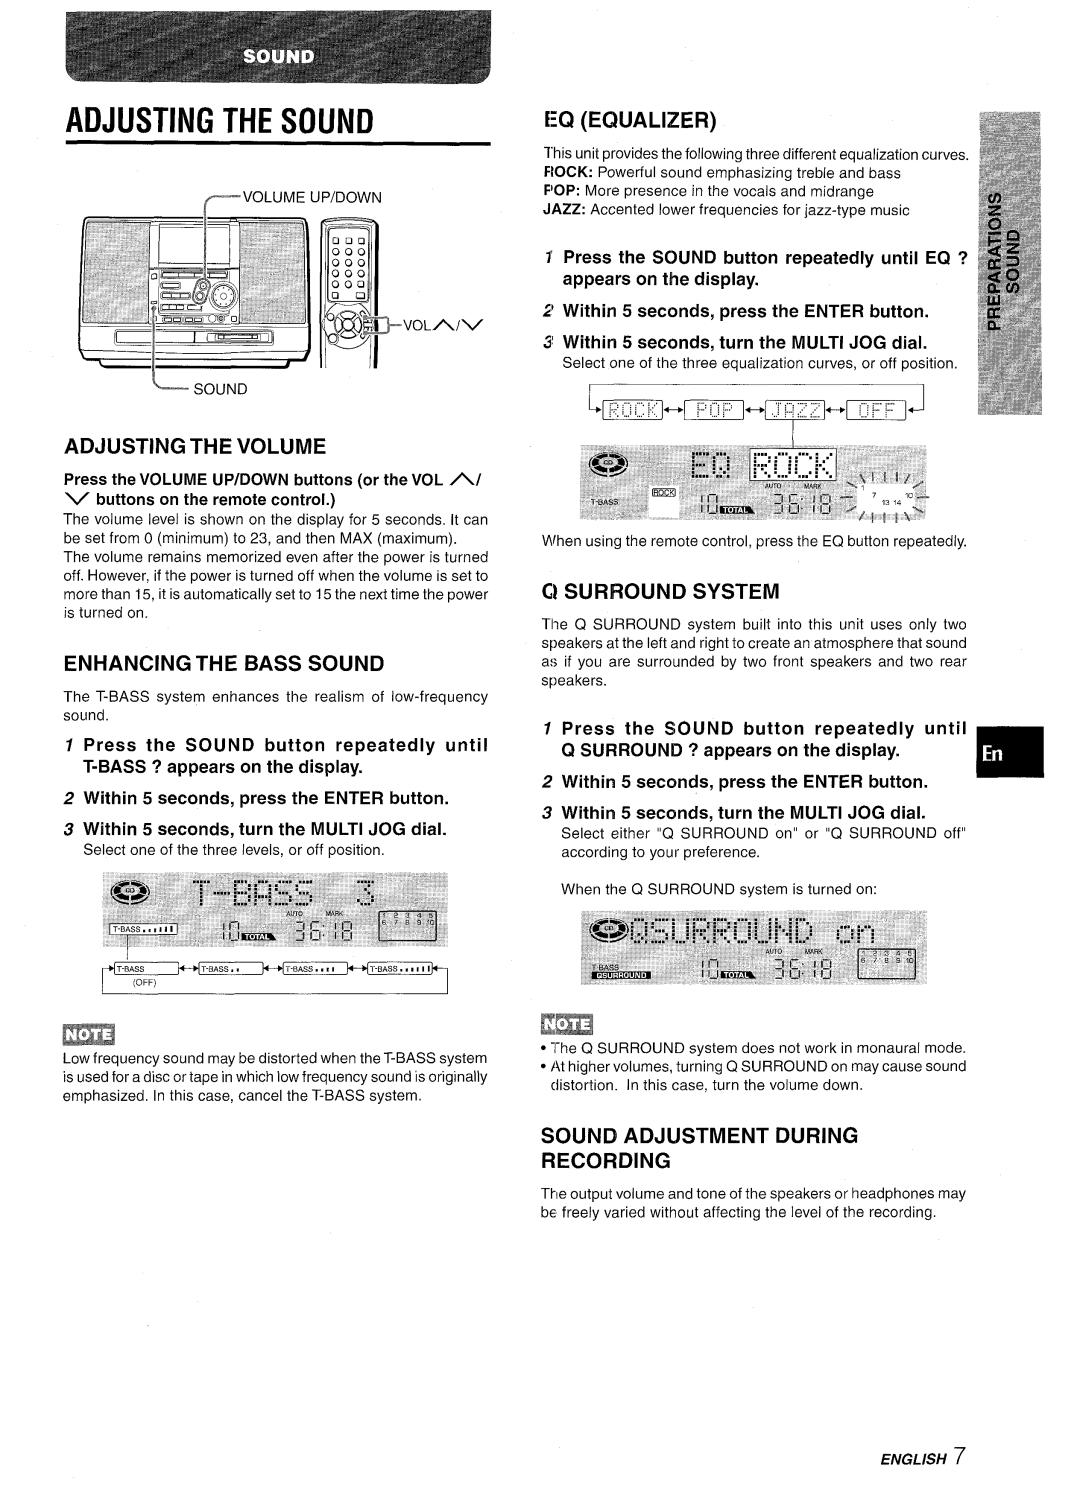 Aiwa CSD-MD50 manual Adjusting The Sound, Eq Equalizer, Adjusting The Volume, Enhancing The Bass Sound, C!Surround System 